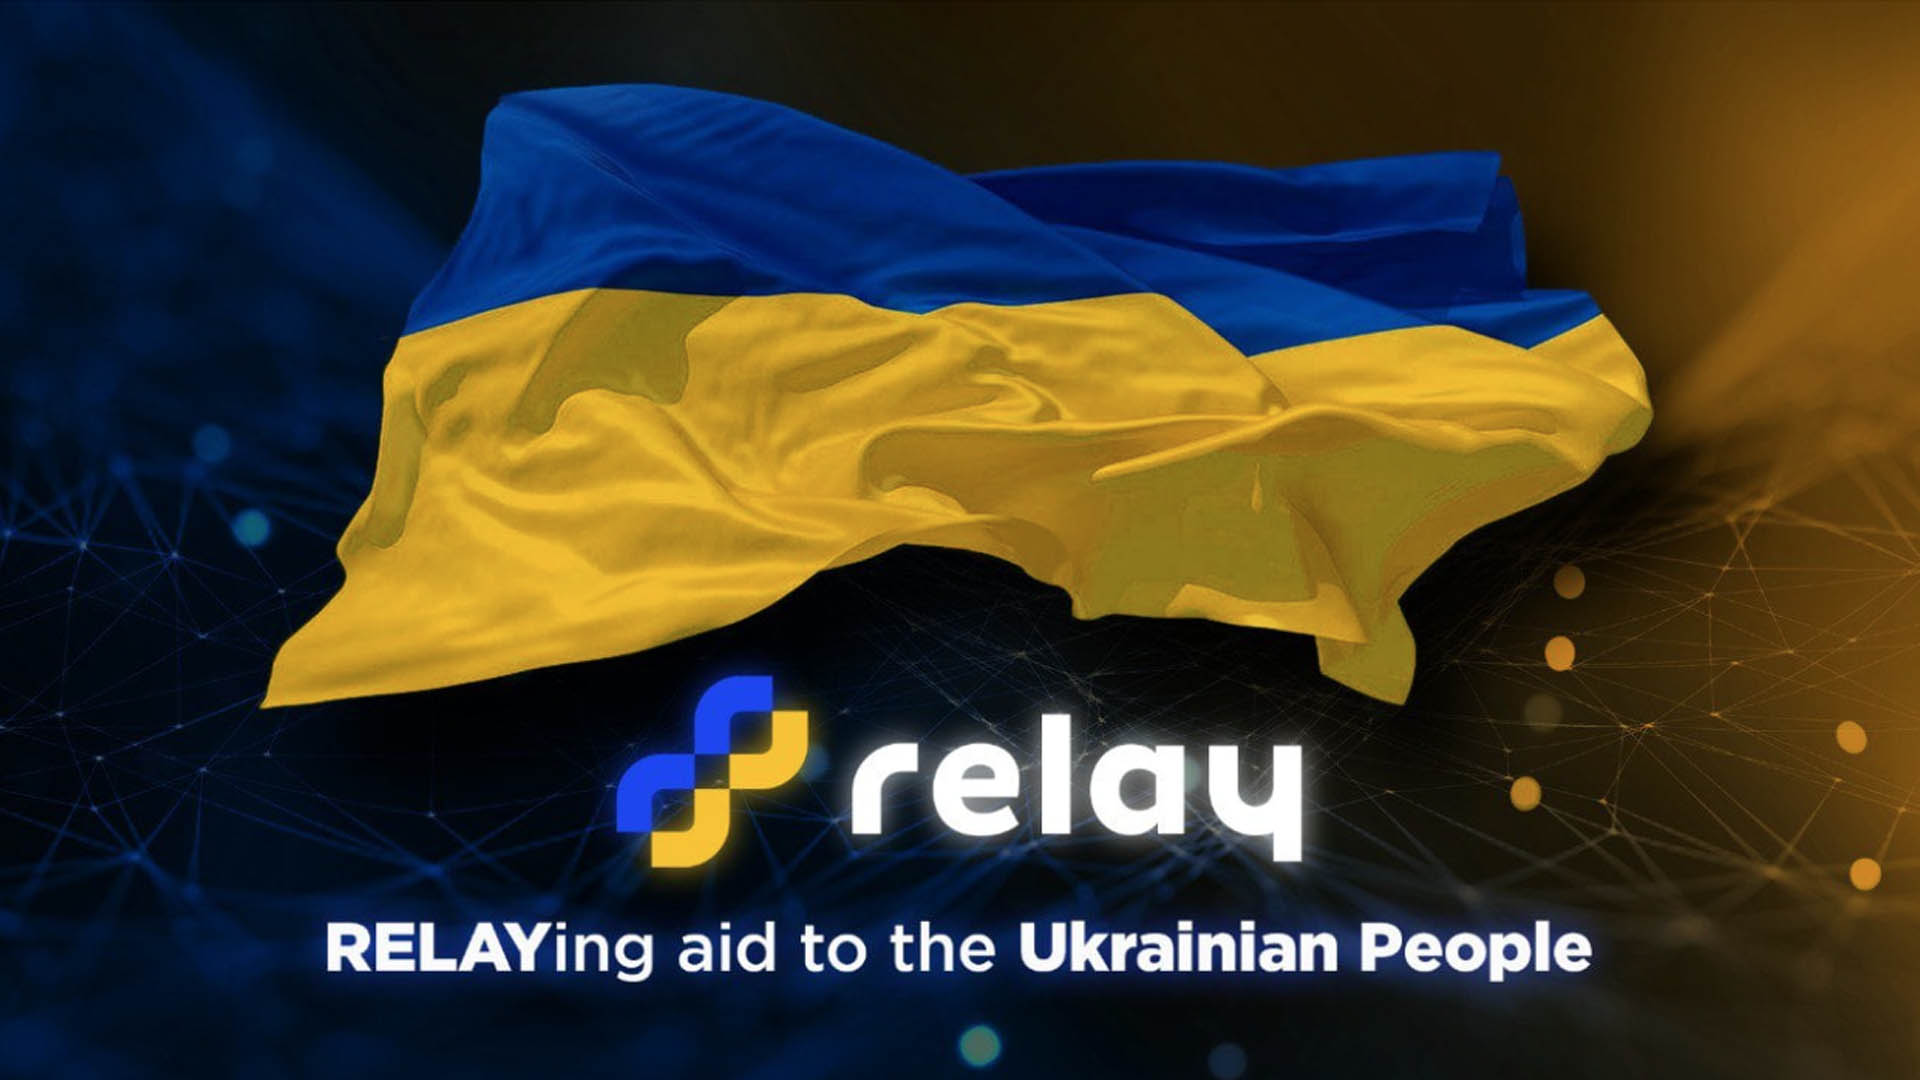 Donating funds to Ukraine